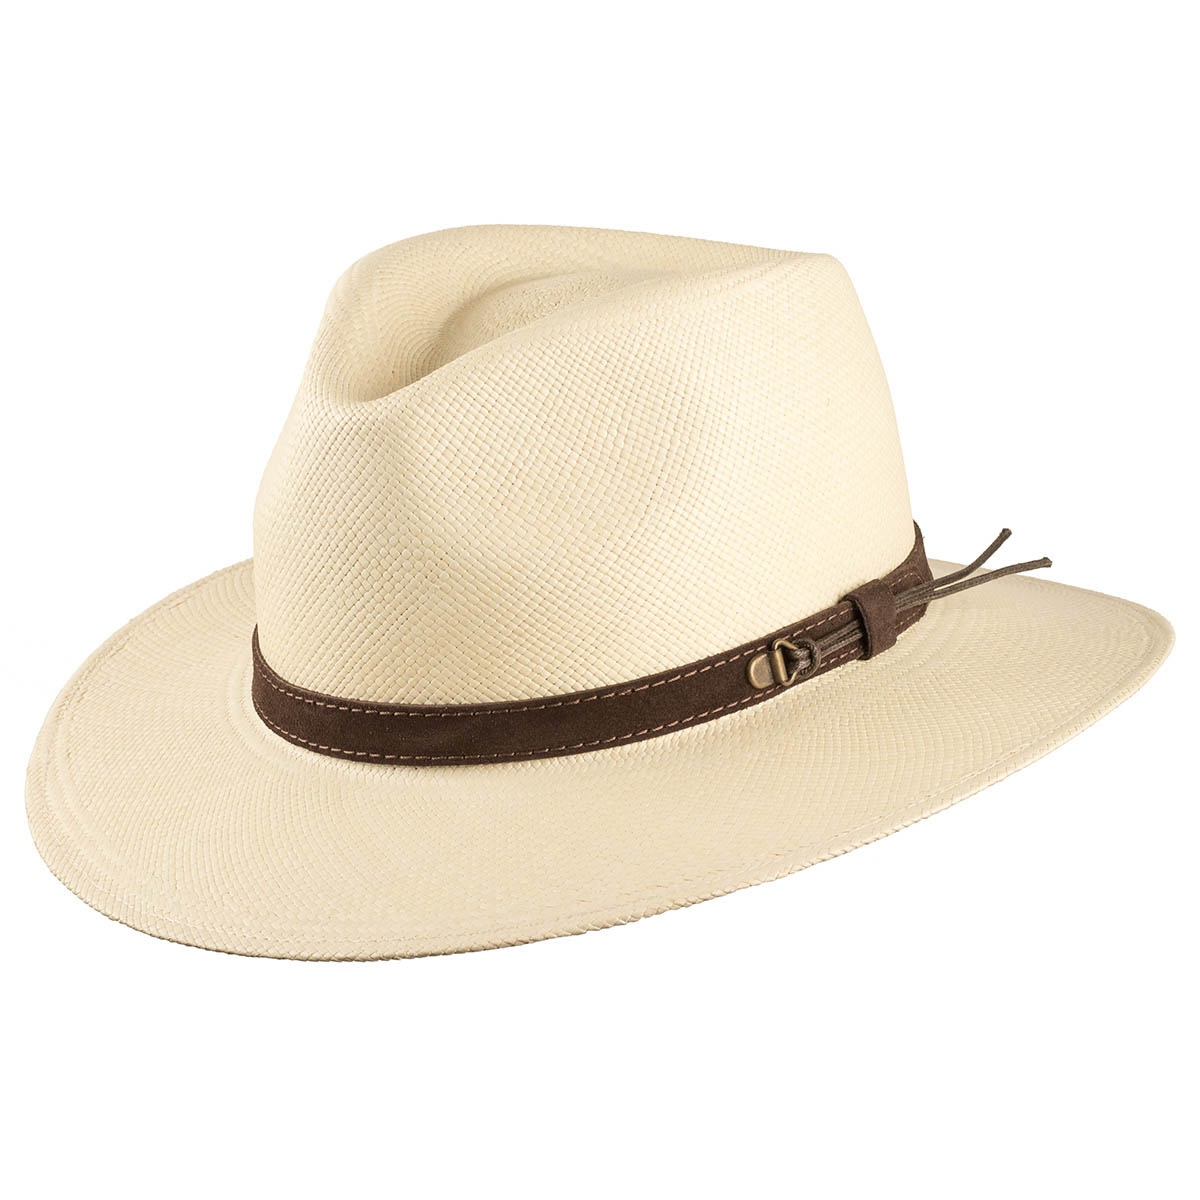 Can be rolls up for packing-Loreto Ecuador Straw Panama Hat -  Paja Toquilla [Box Packing&Buy 2 Get Free Shipping] Hatbor